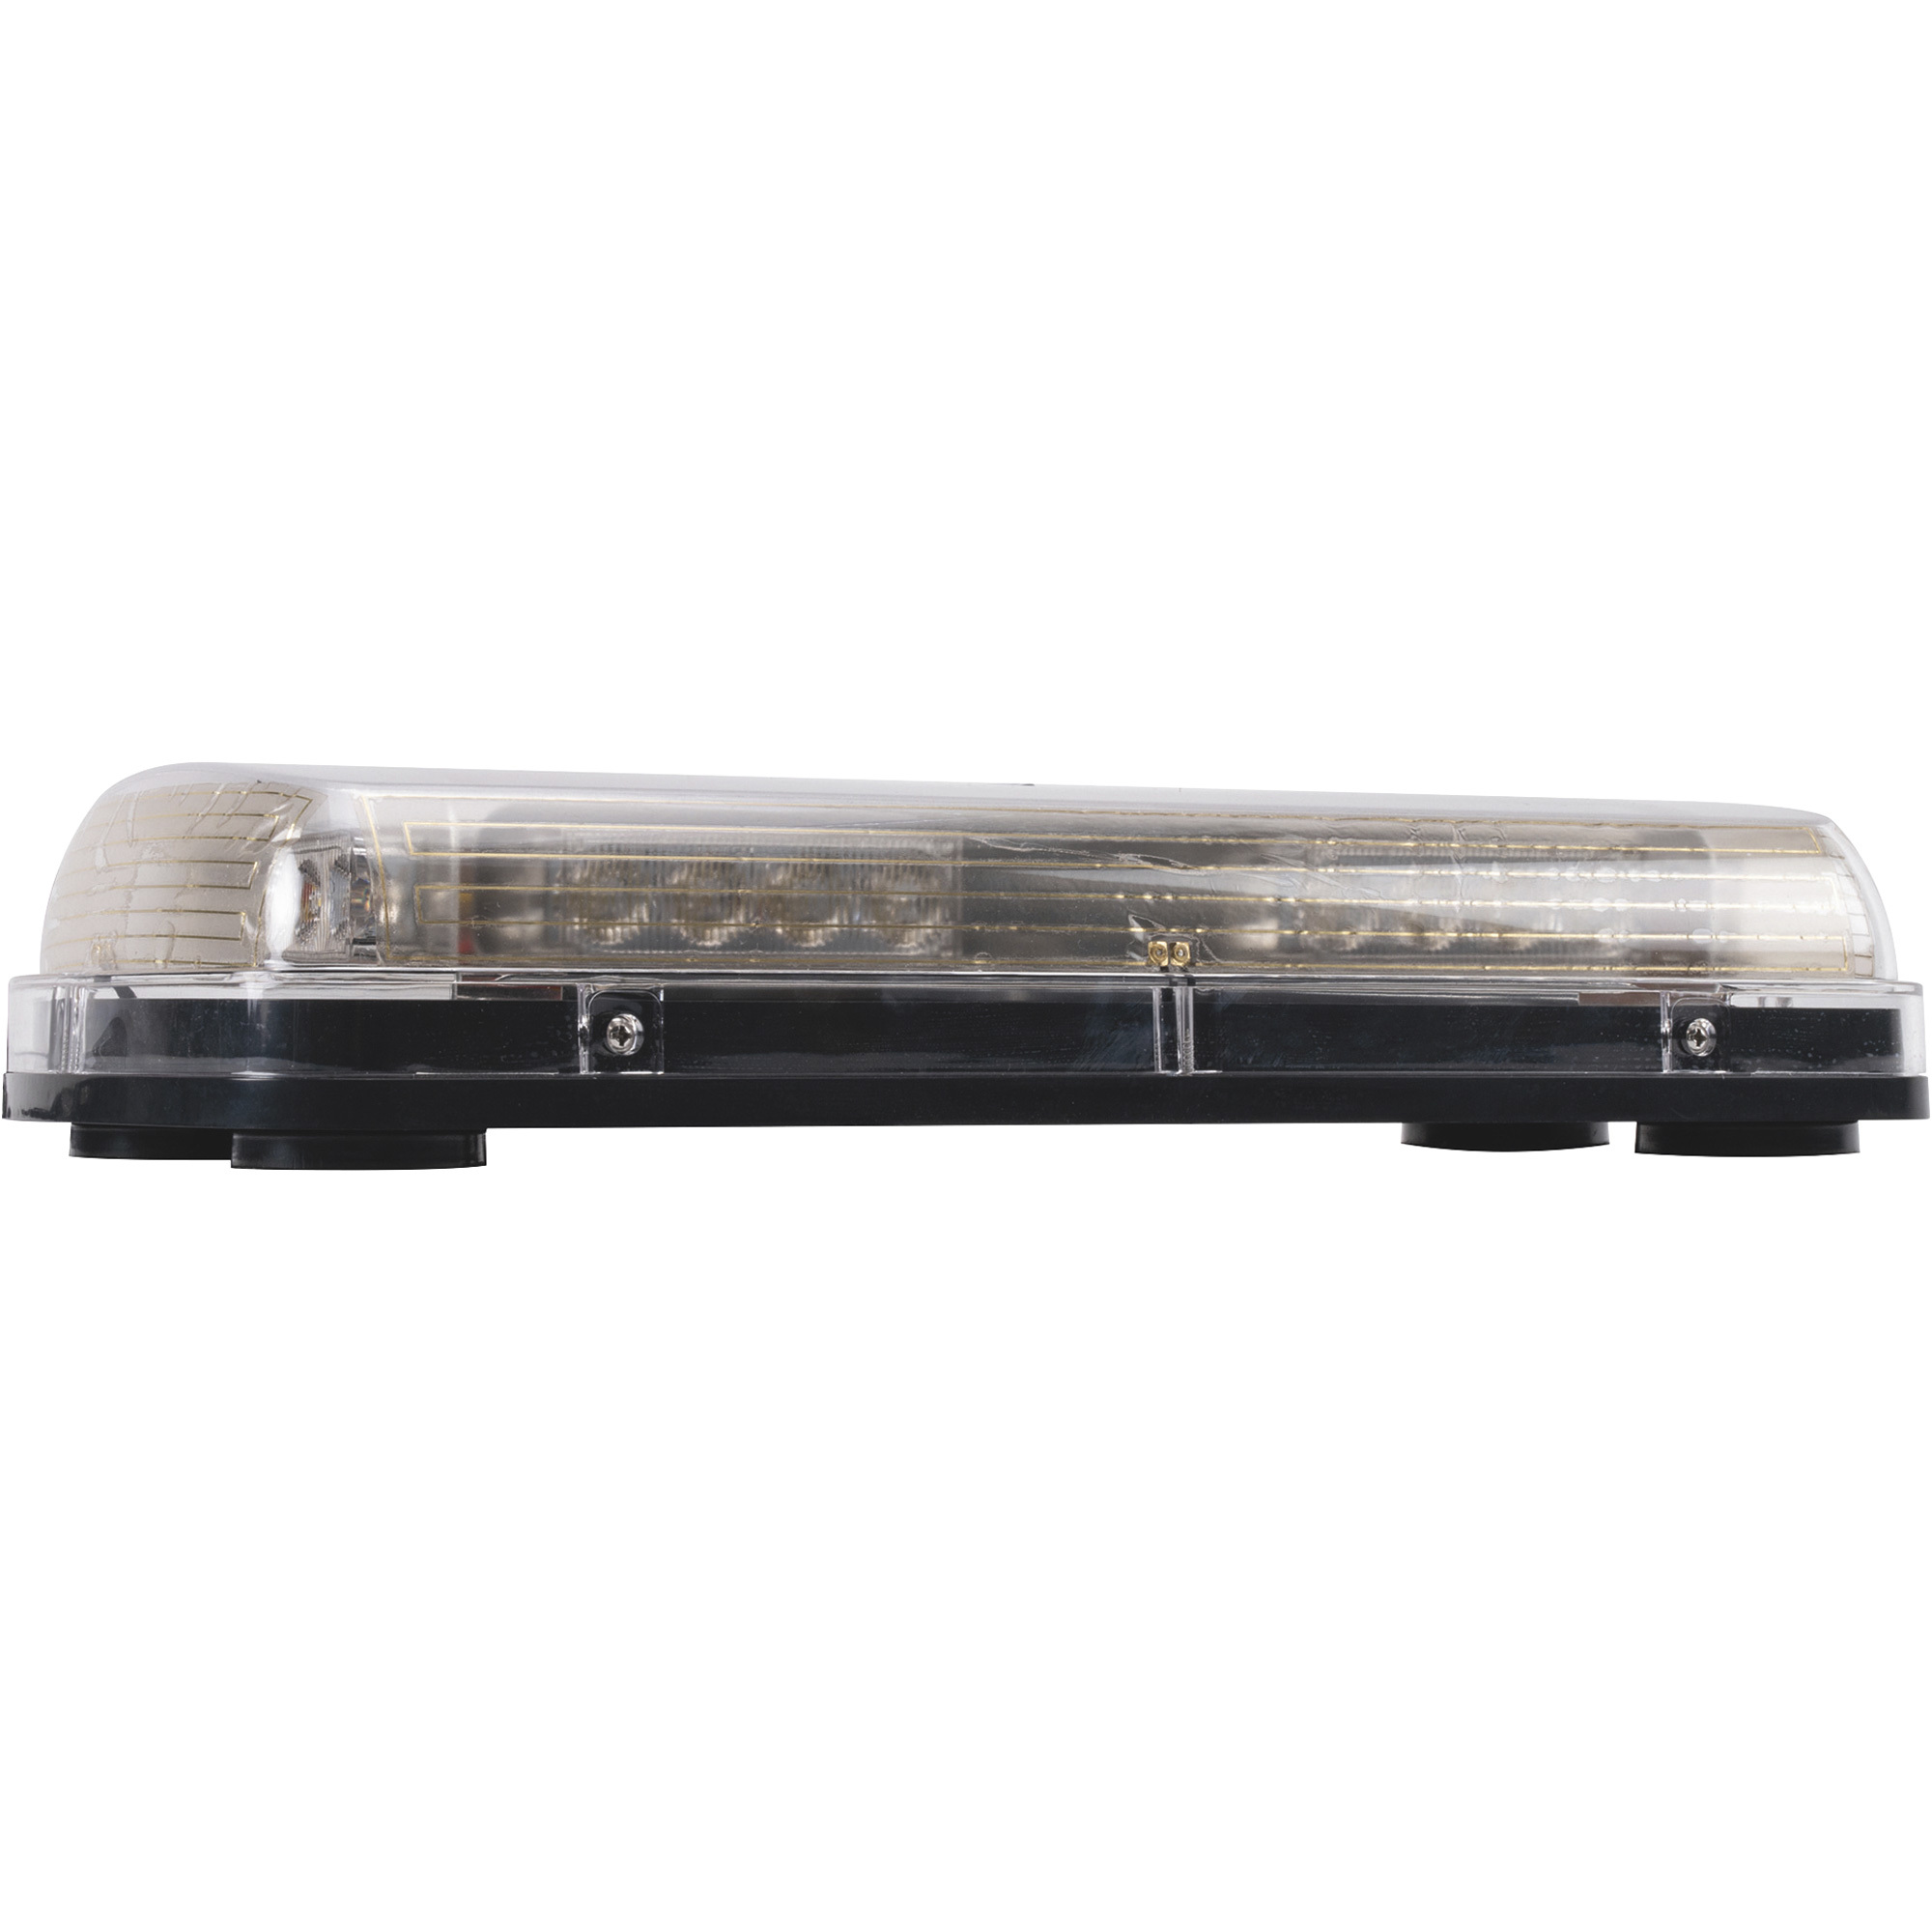 Blazer 12V LED Heated Mini Class 2 Warning Light Bar â 17Inch, White/Amber, 9 Flash Patterns, Magnetic Mount, Model C4850CACH